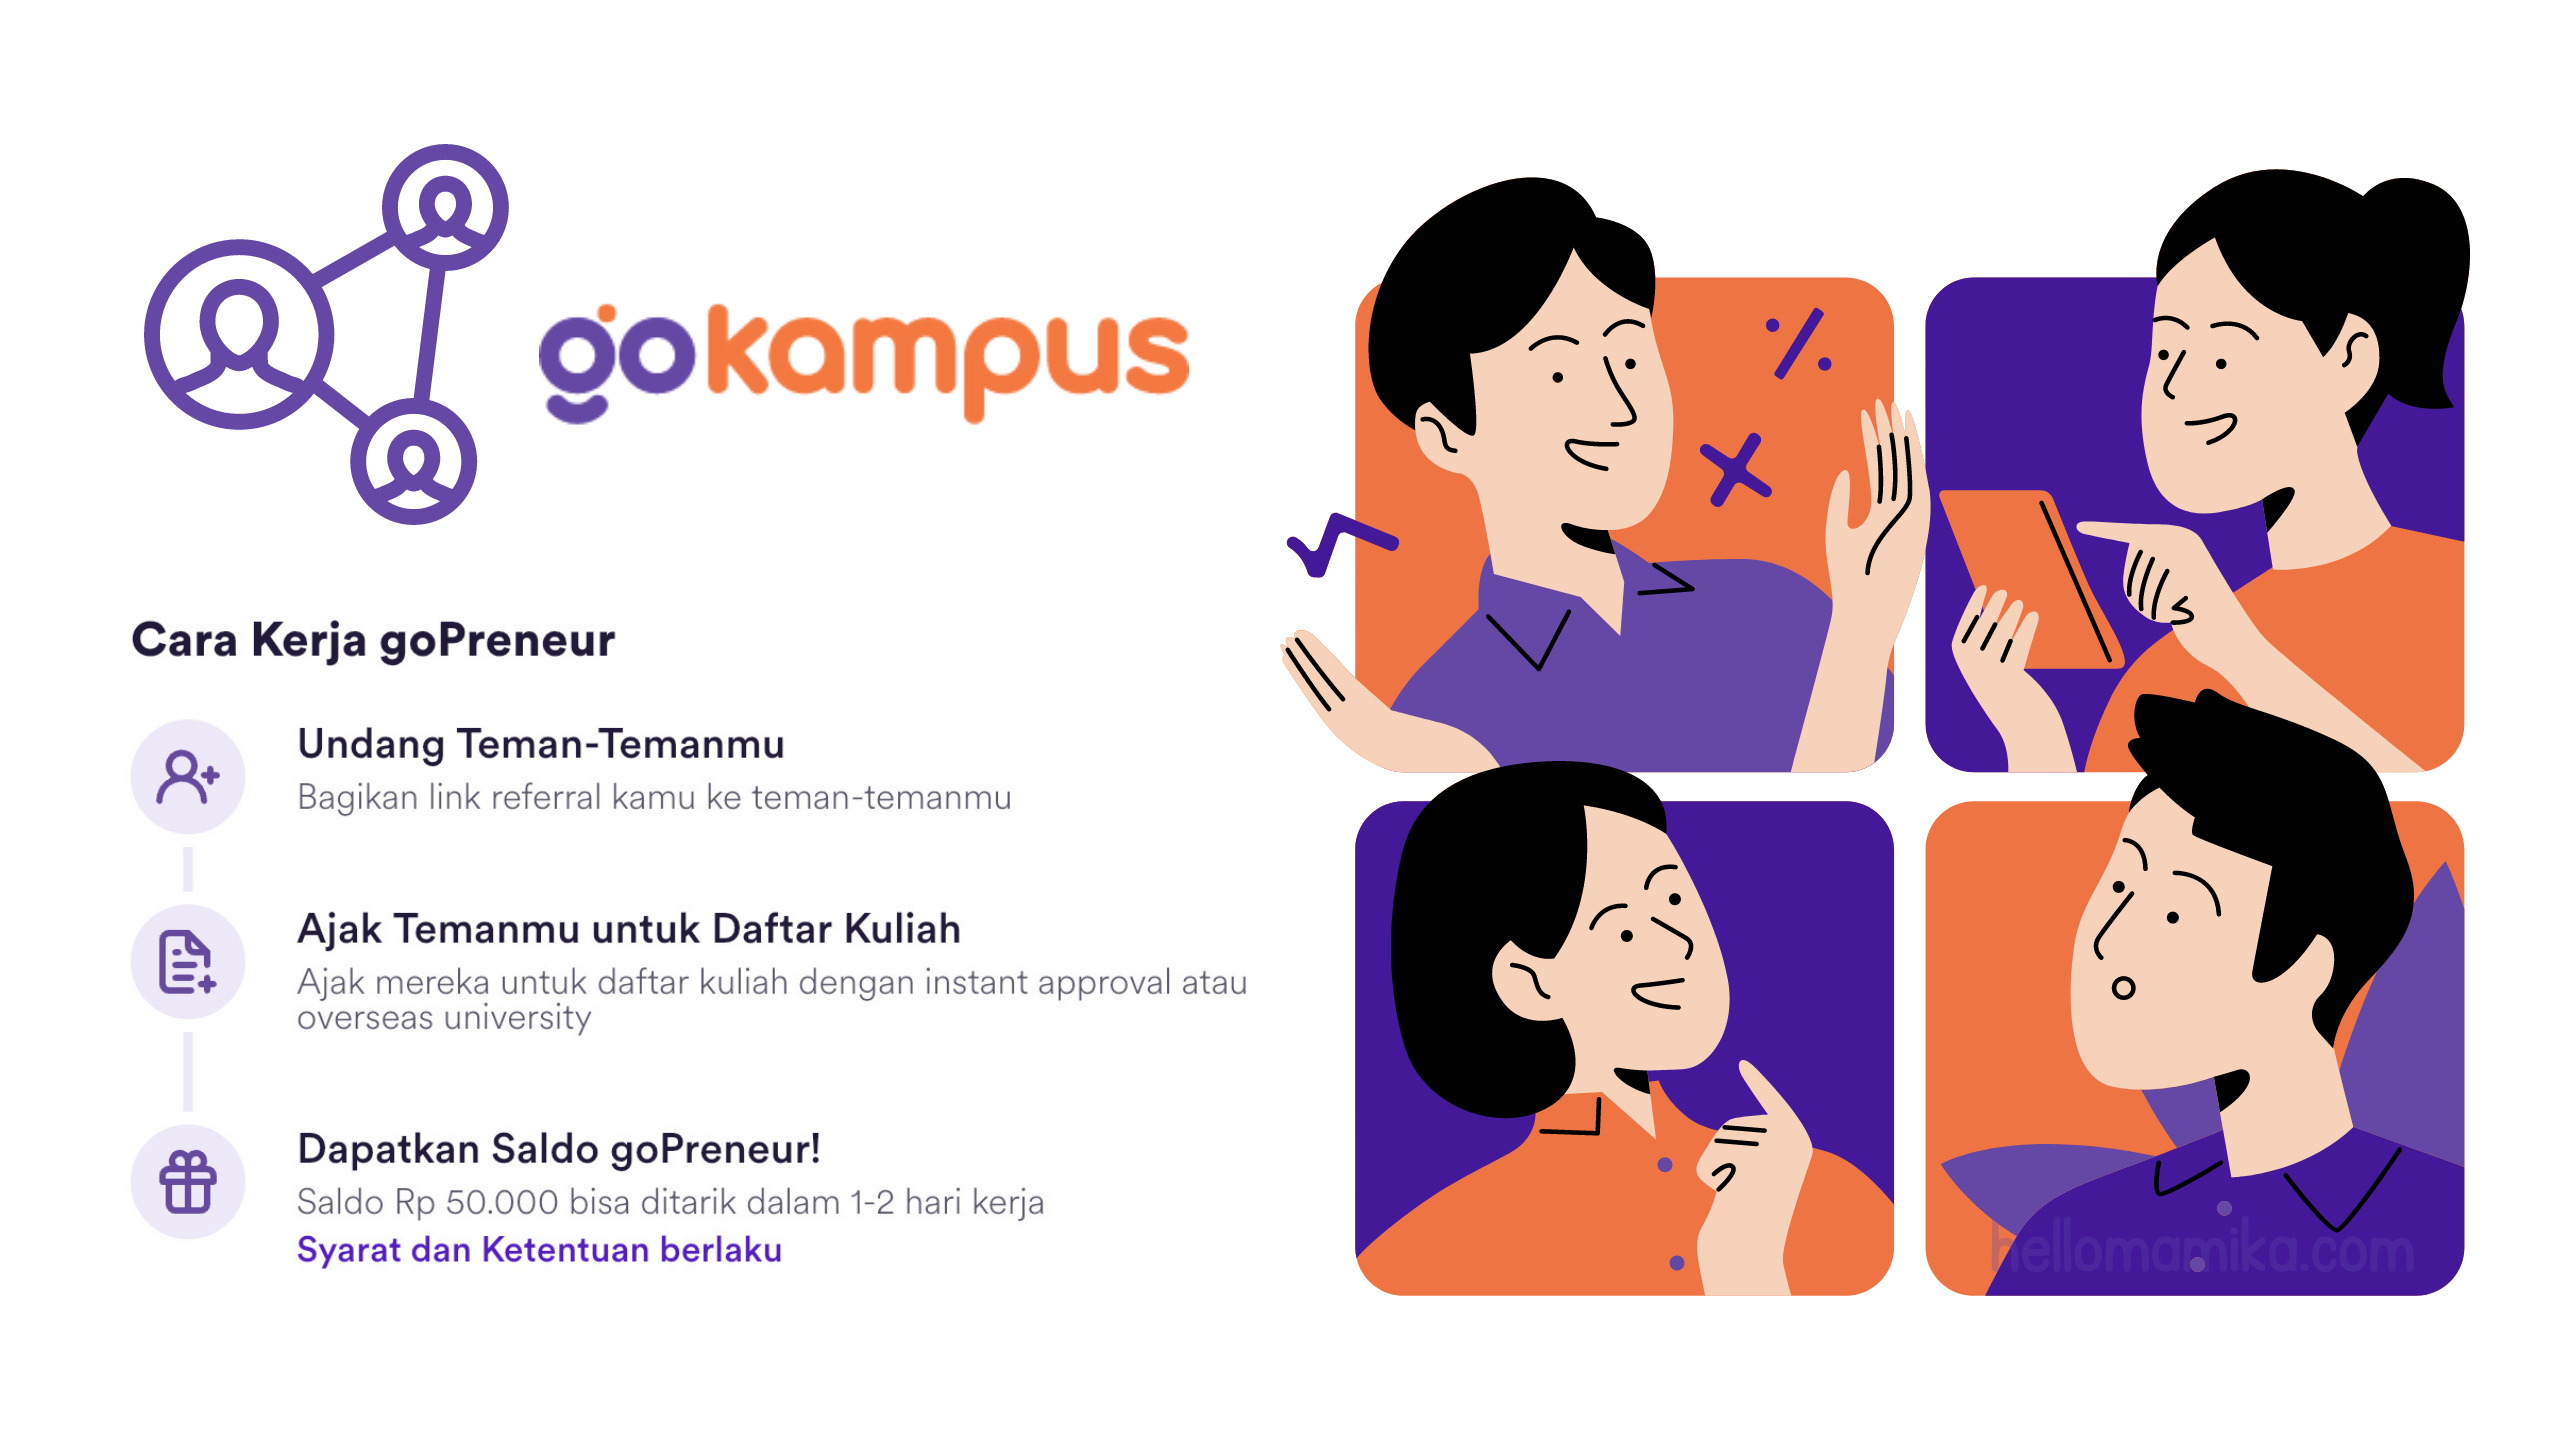 Review aplikasi goKampus